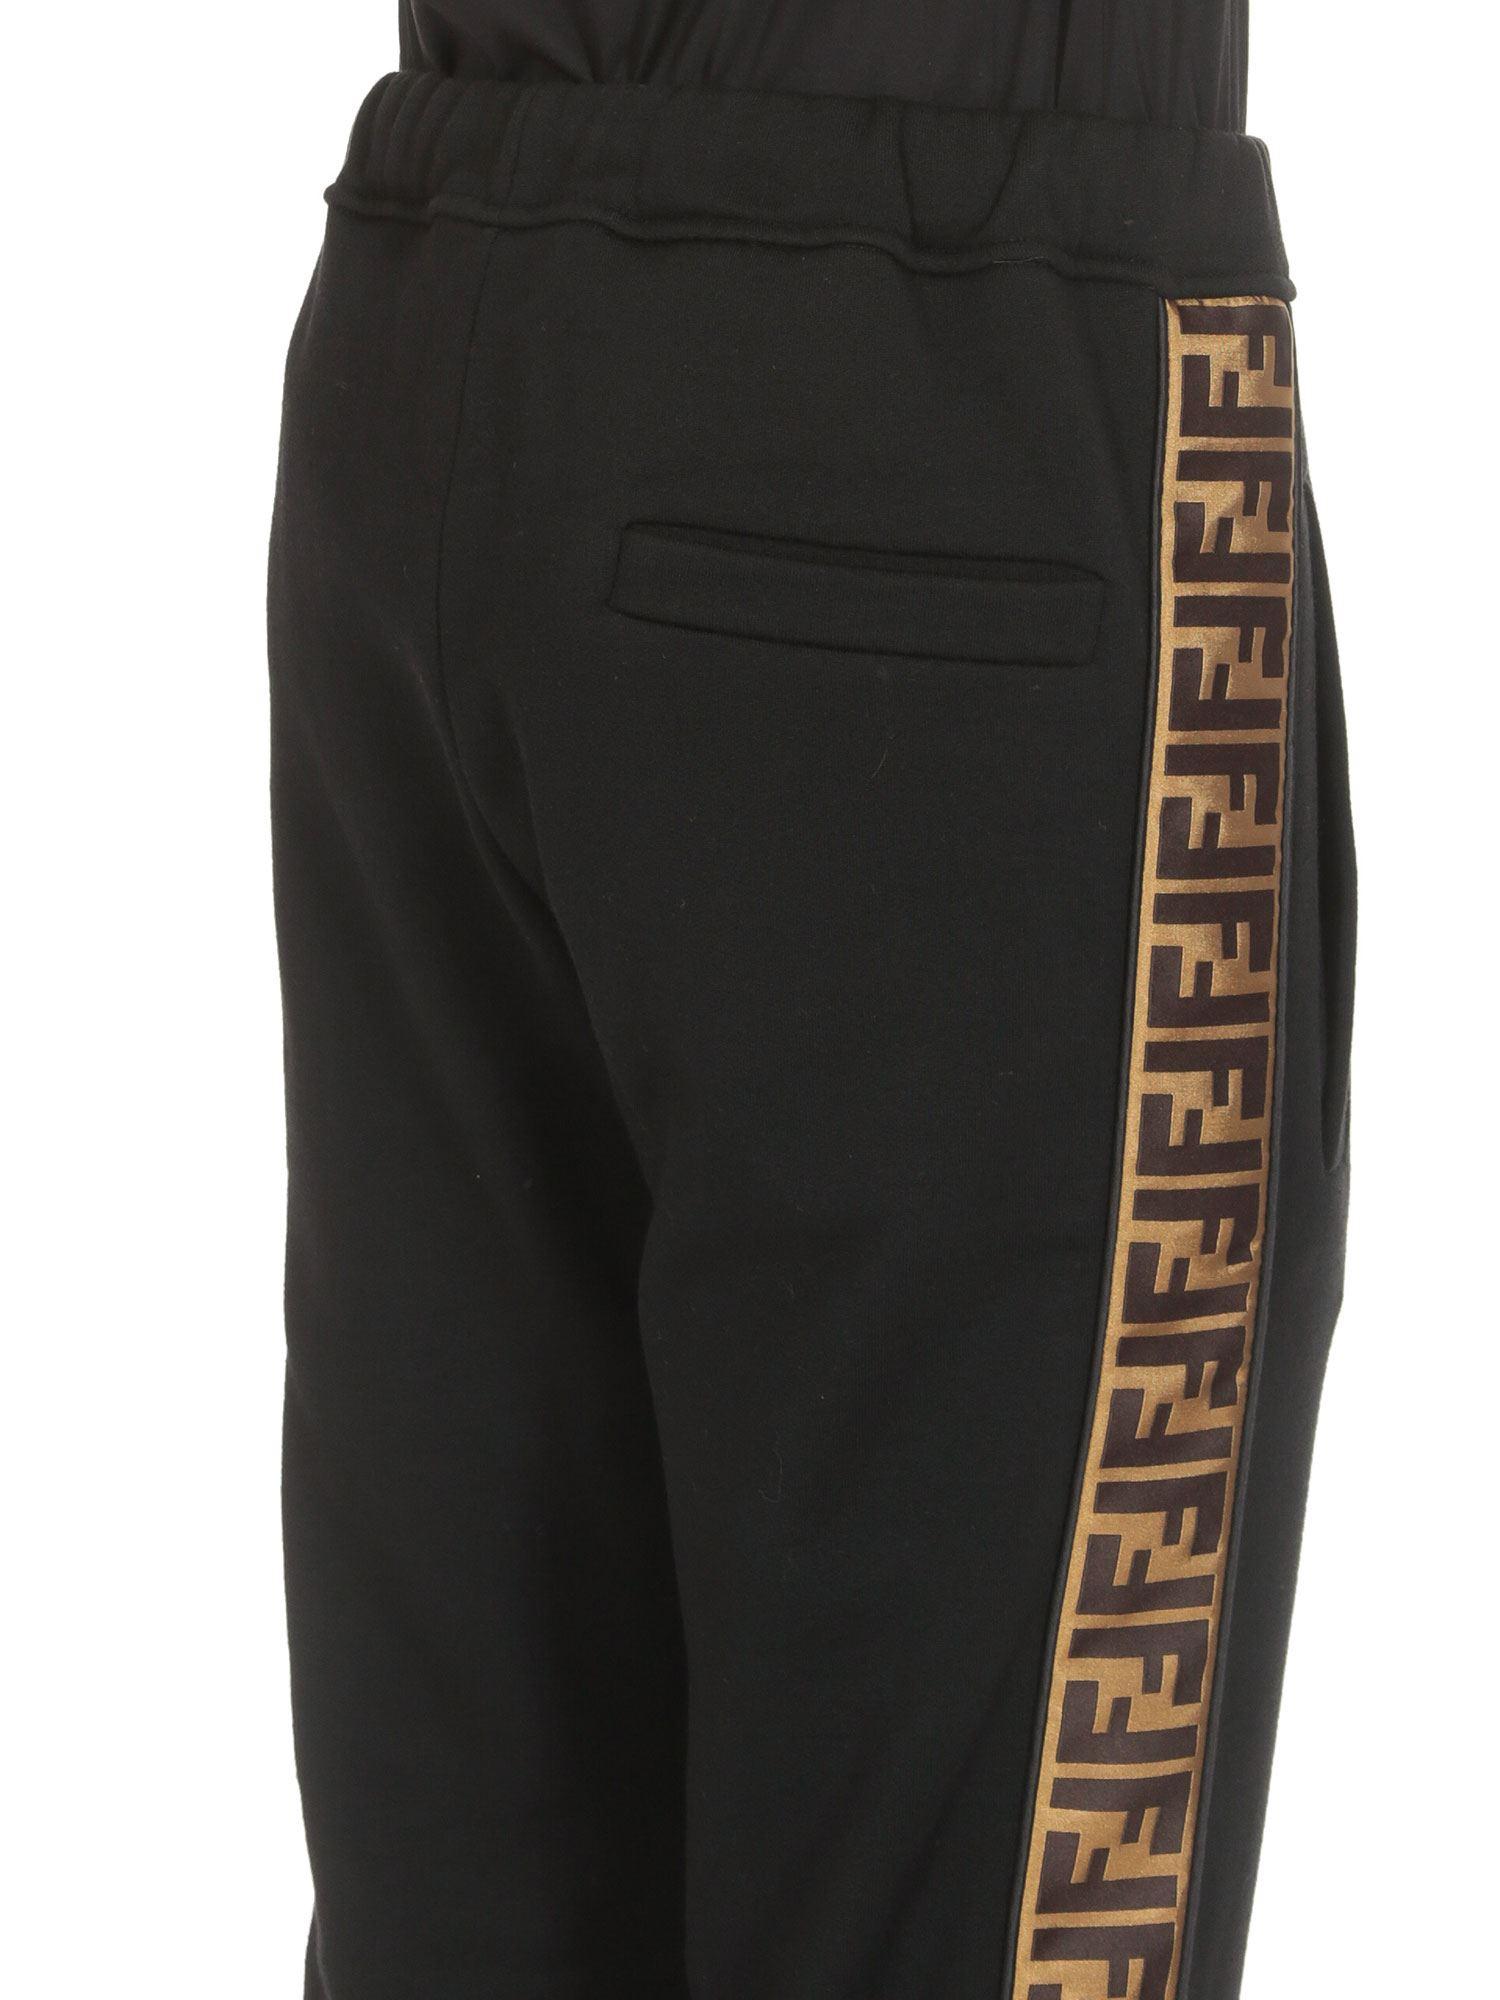 Fendi Wool Jogging Pants In Black for Men - Lyst